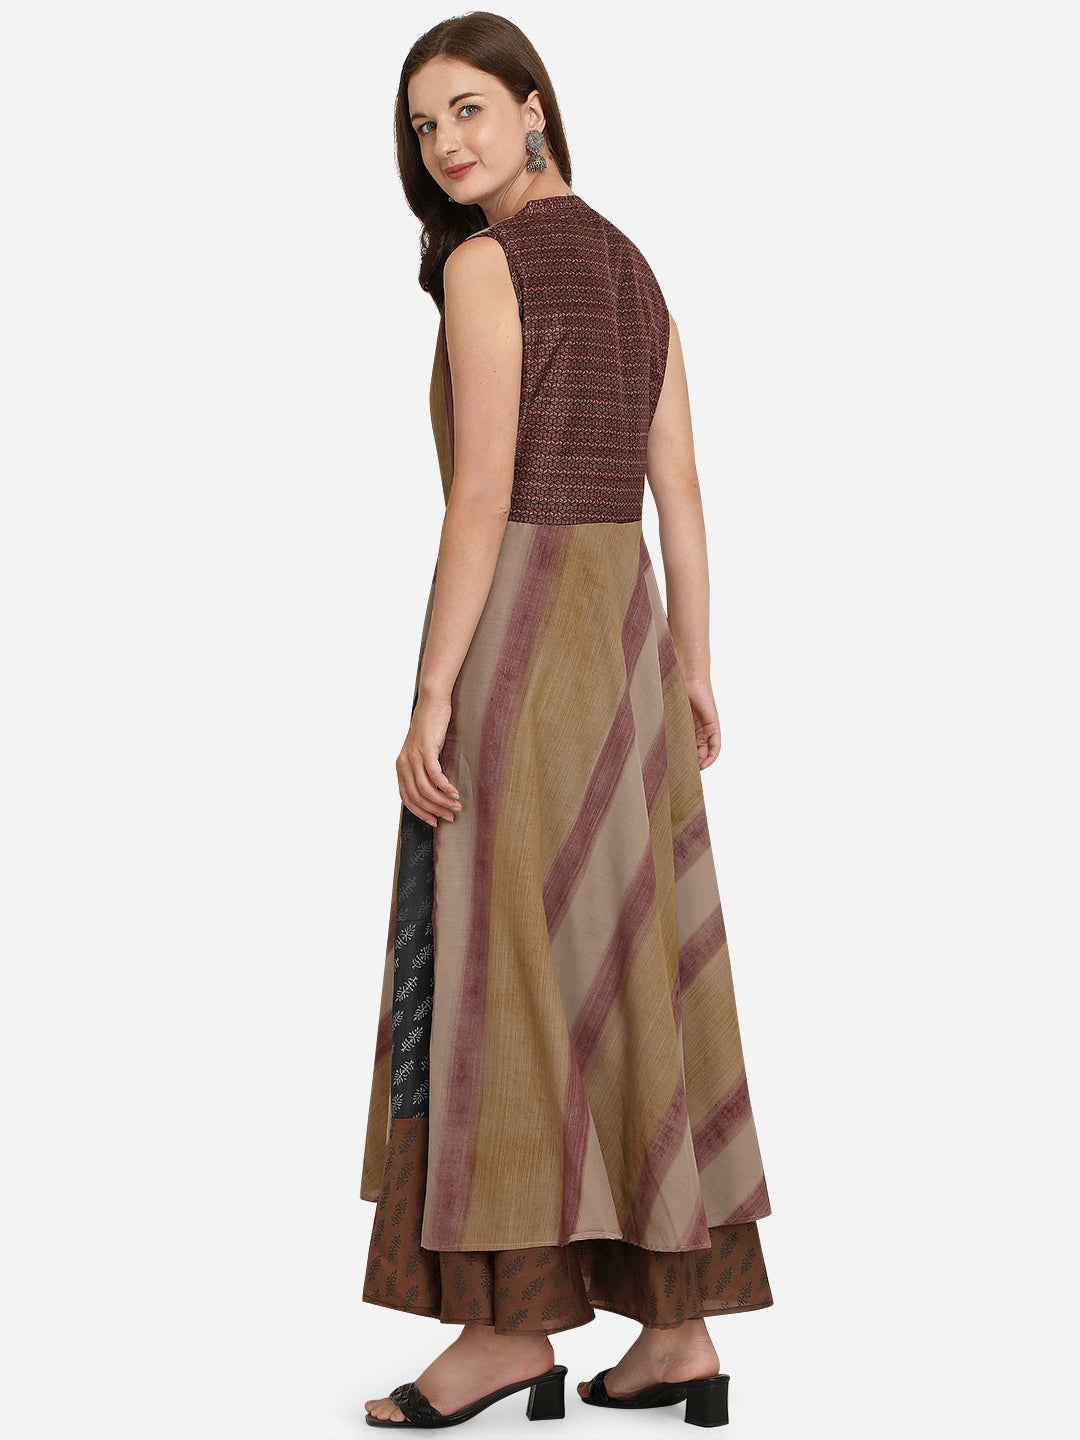 Women's Multi Cotton Silk Bollywood Exclusive Kurti - Ad-5041 - Navyaa